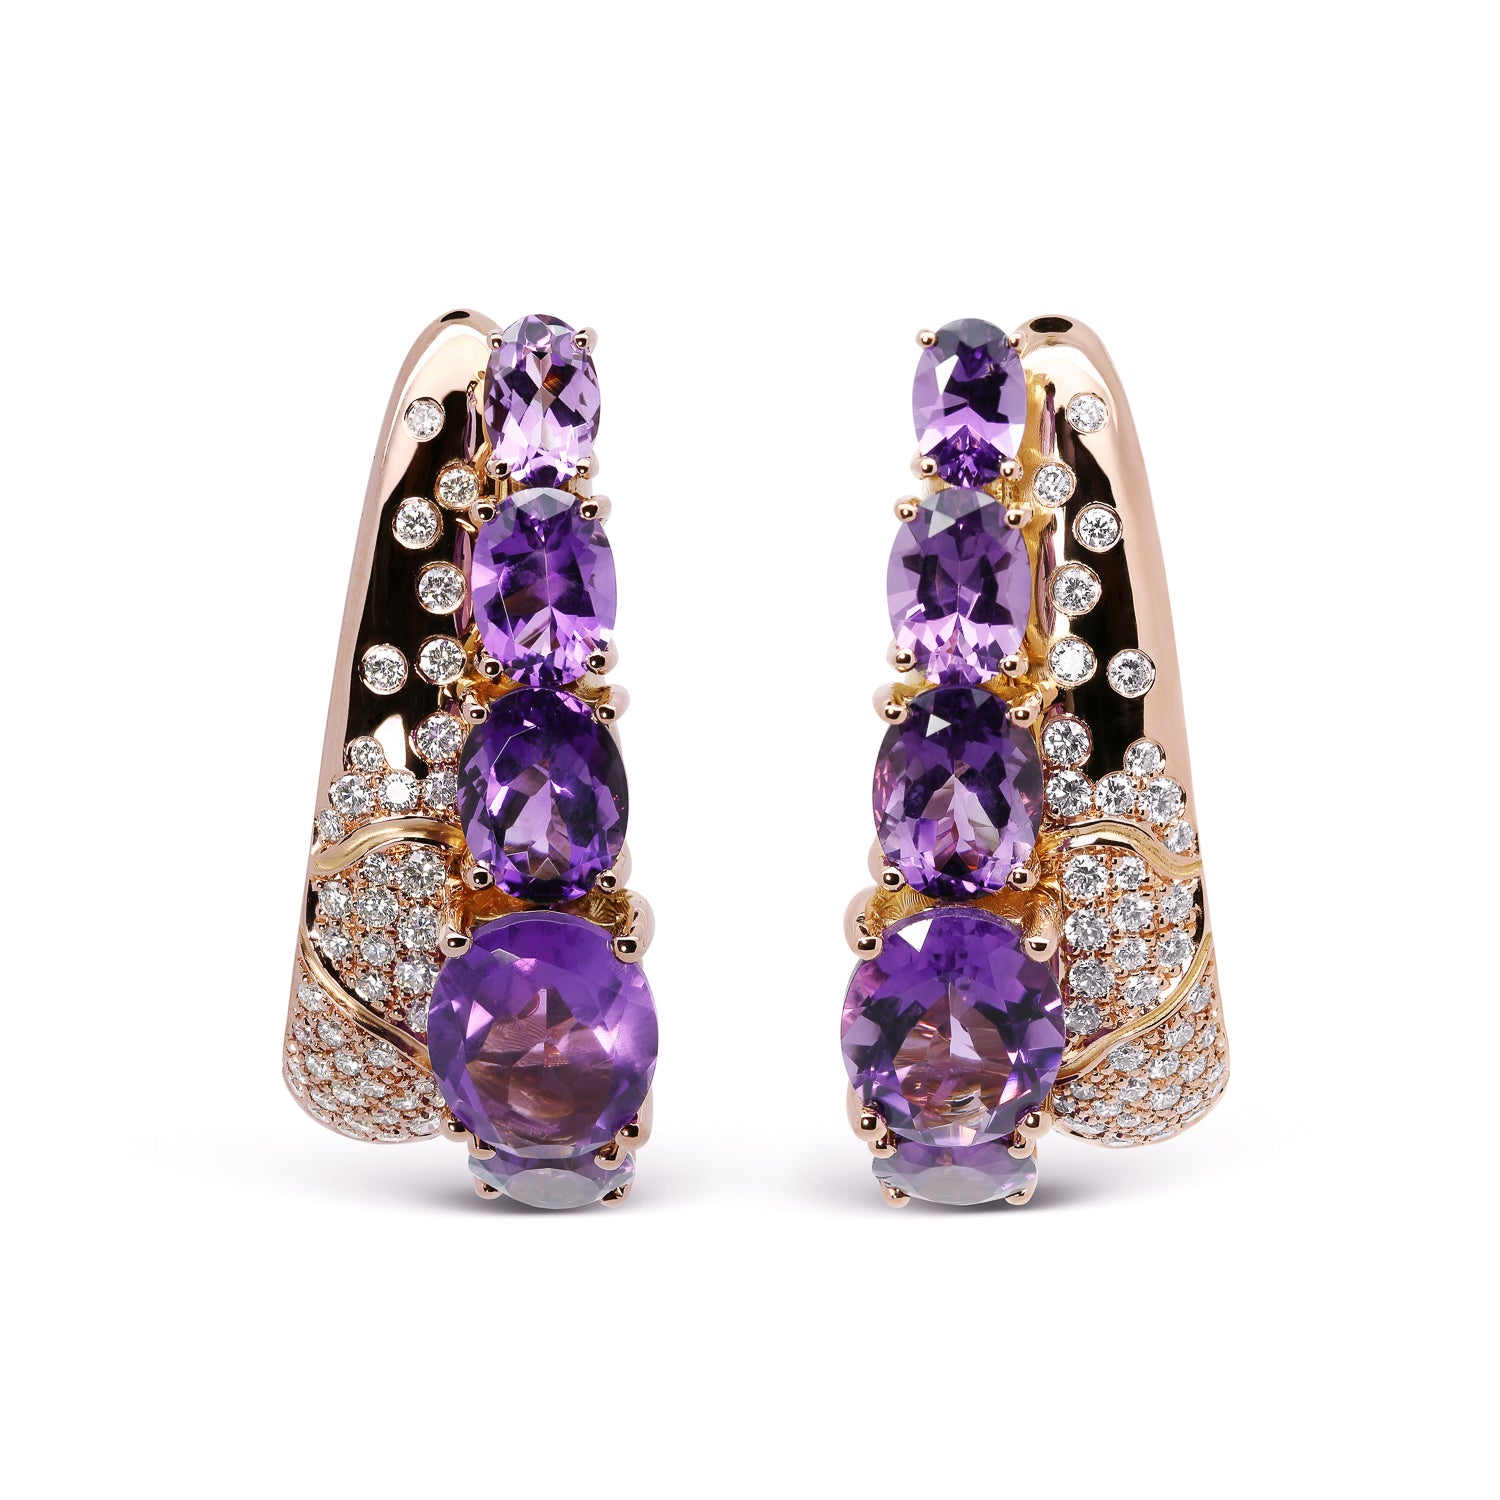 Bespoke Amethyst and Diamond Earrings